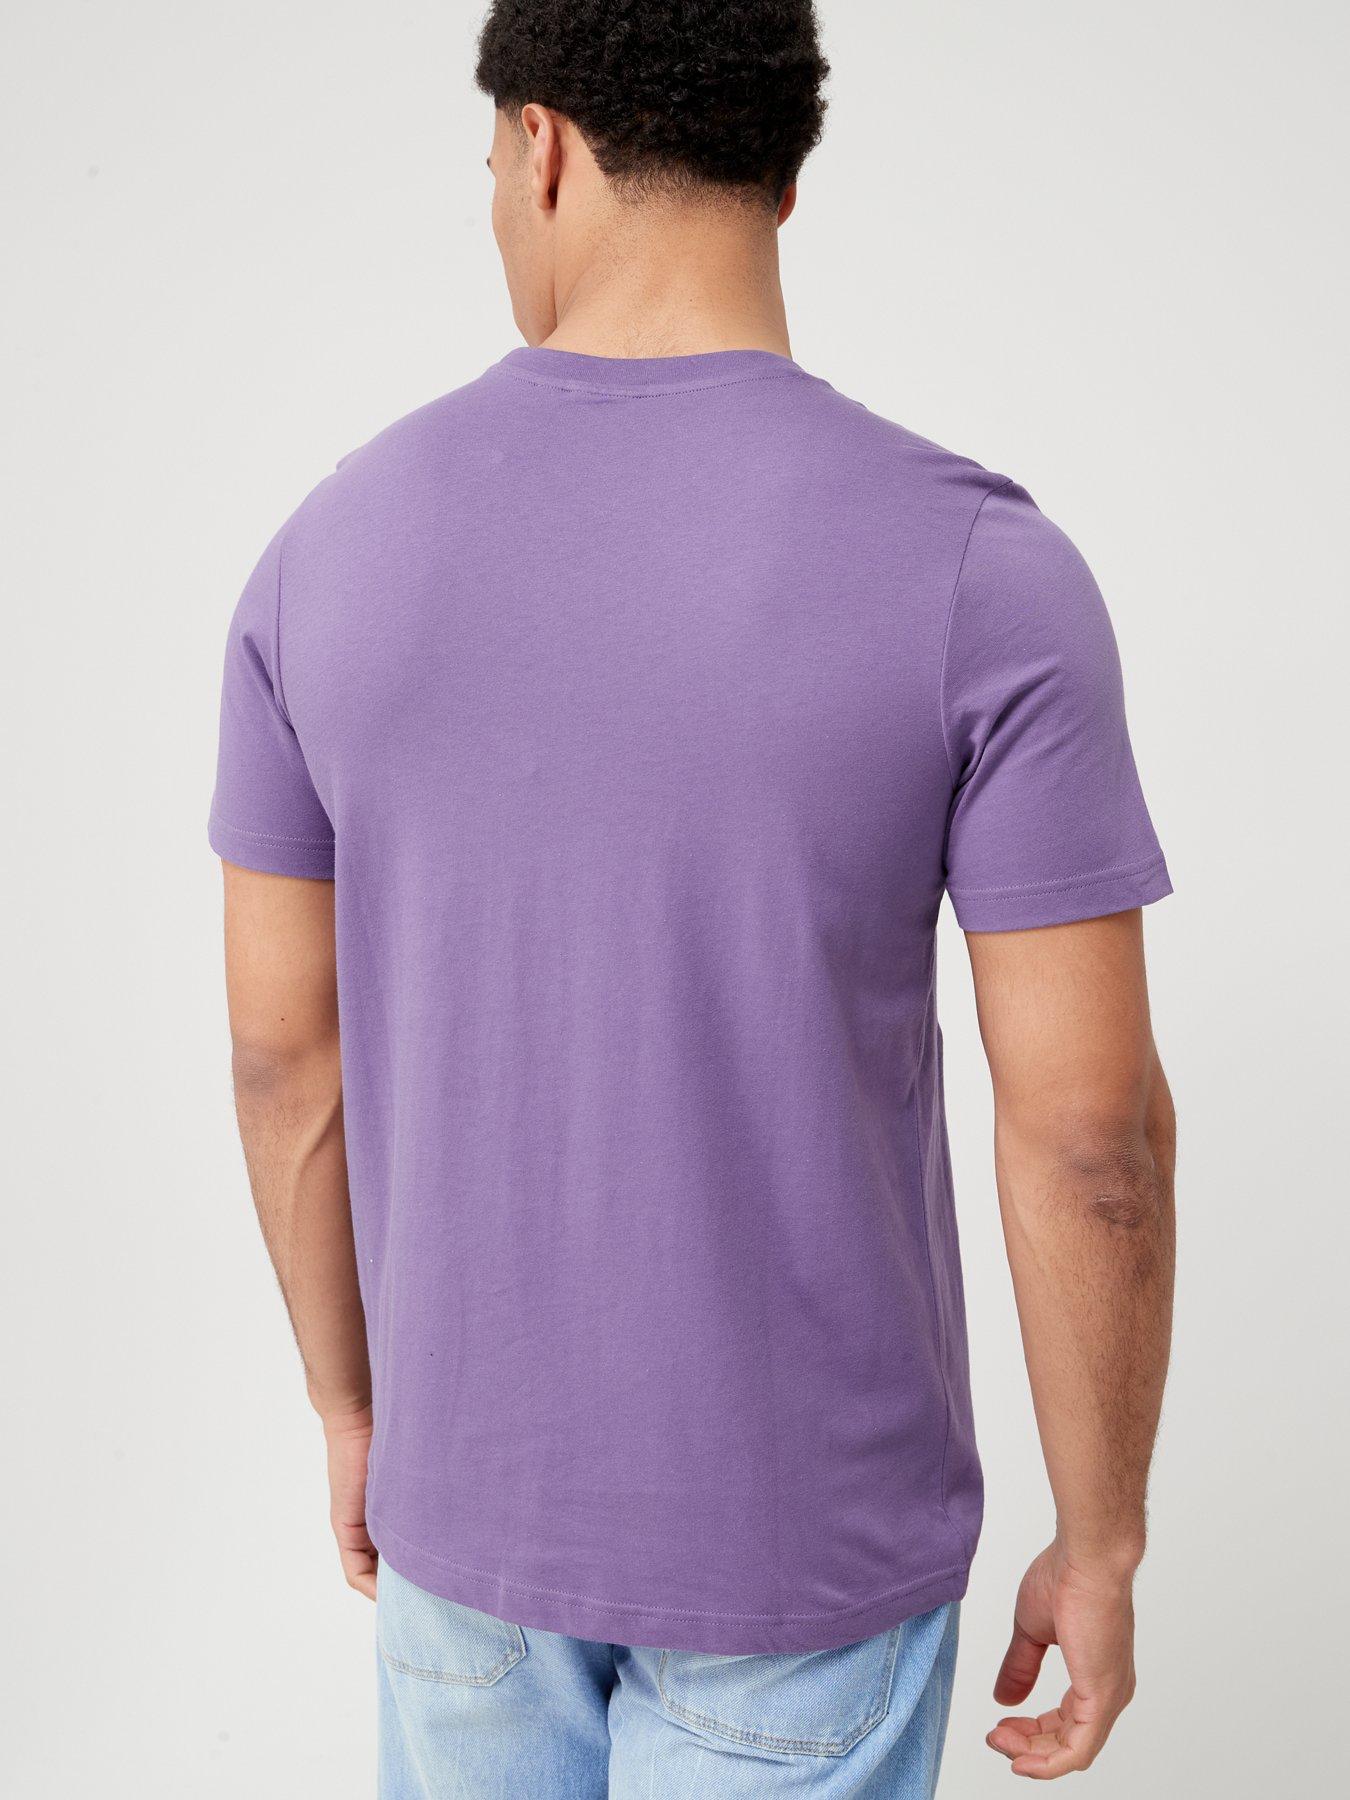 Essentials adidas Trefoil T-Shirt - Originals Purple